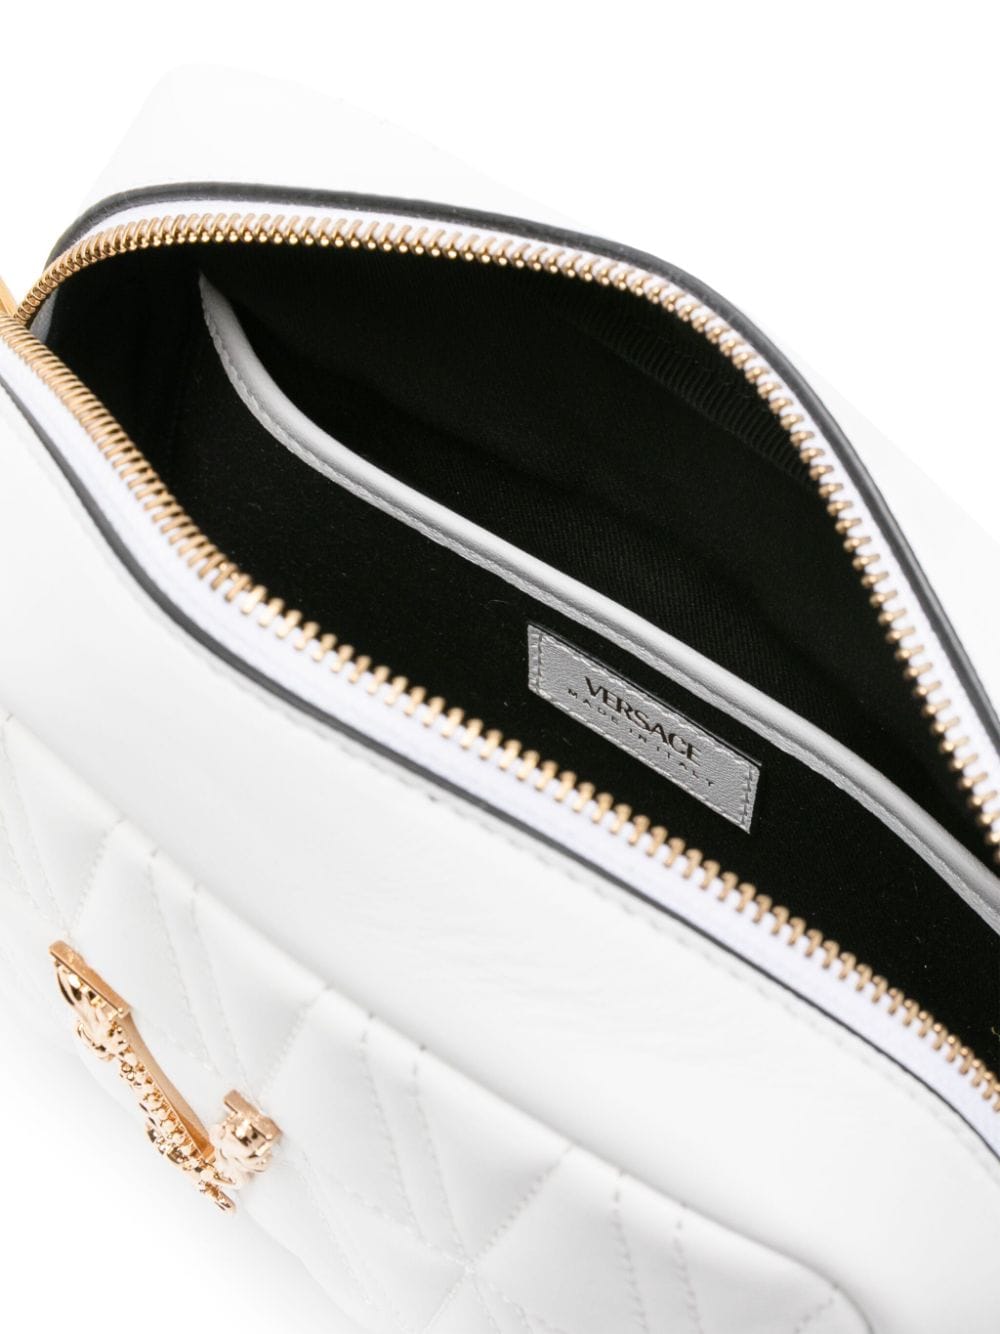 White Virtus leather crossbody bag